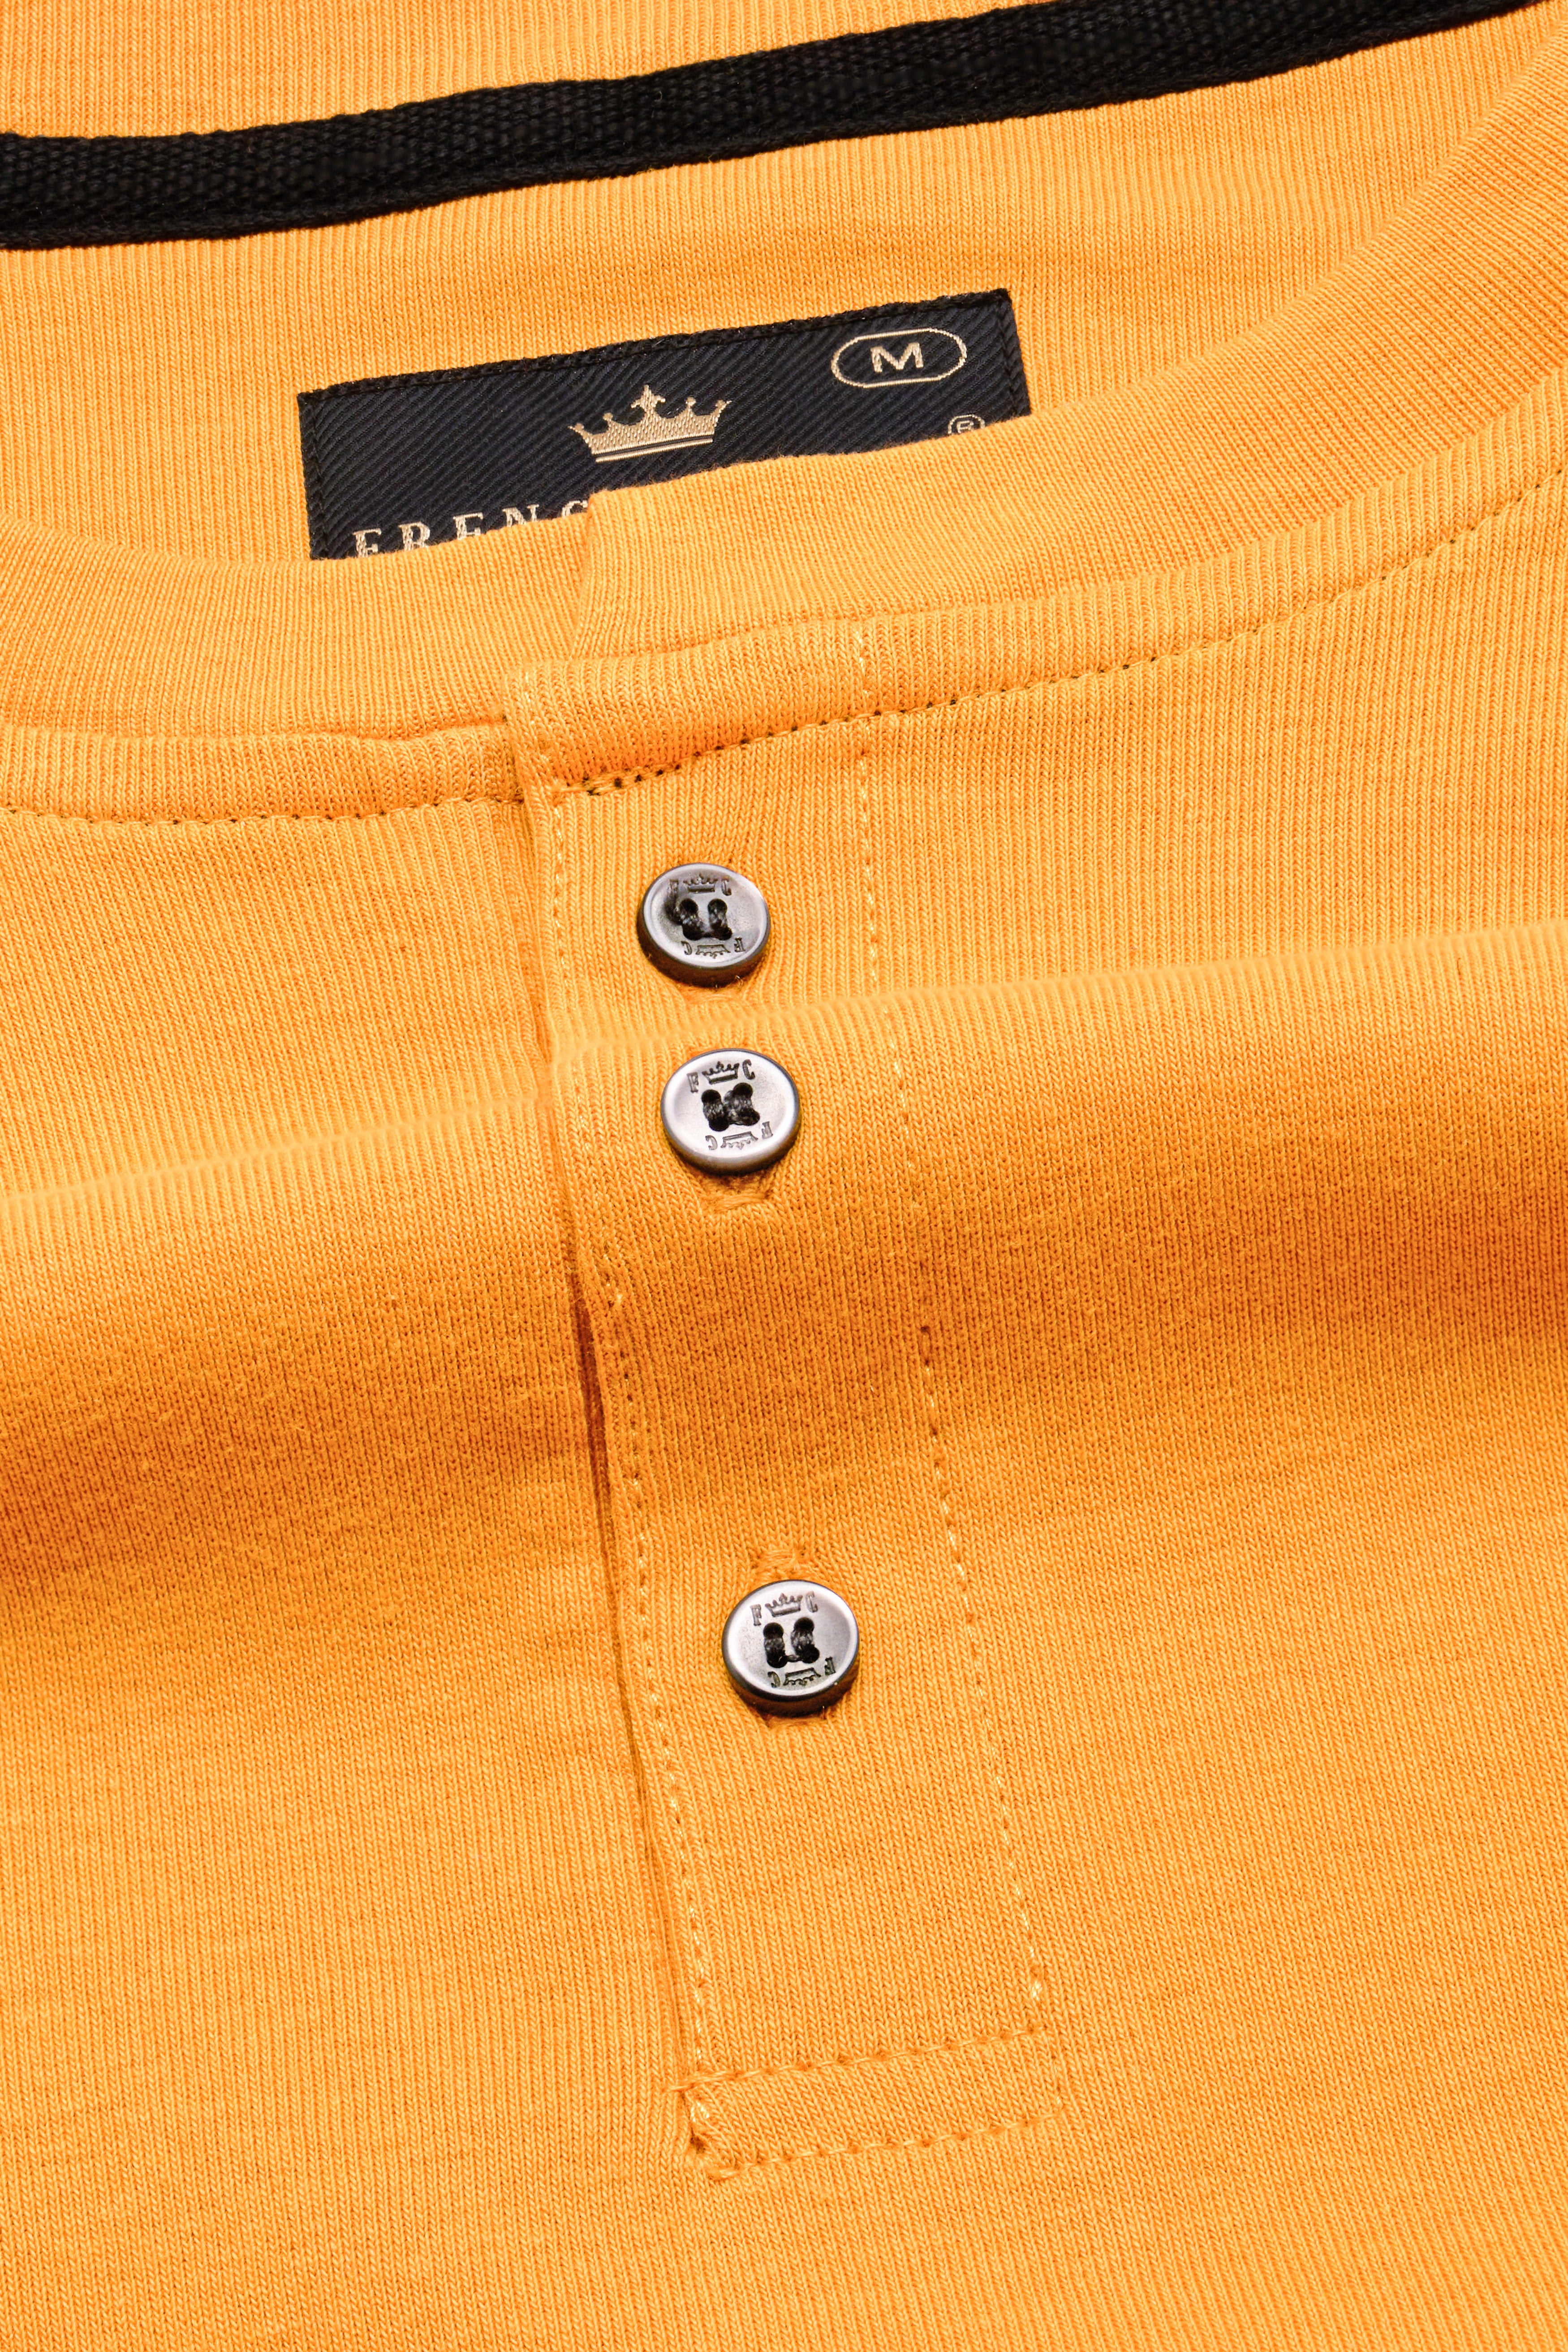 Butterscotch Orange Premium Cotton Round Neck Jersey T-Shirt TS915-S, TS915-M, TS915-L, TS915-XL, TS915-XXL